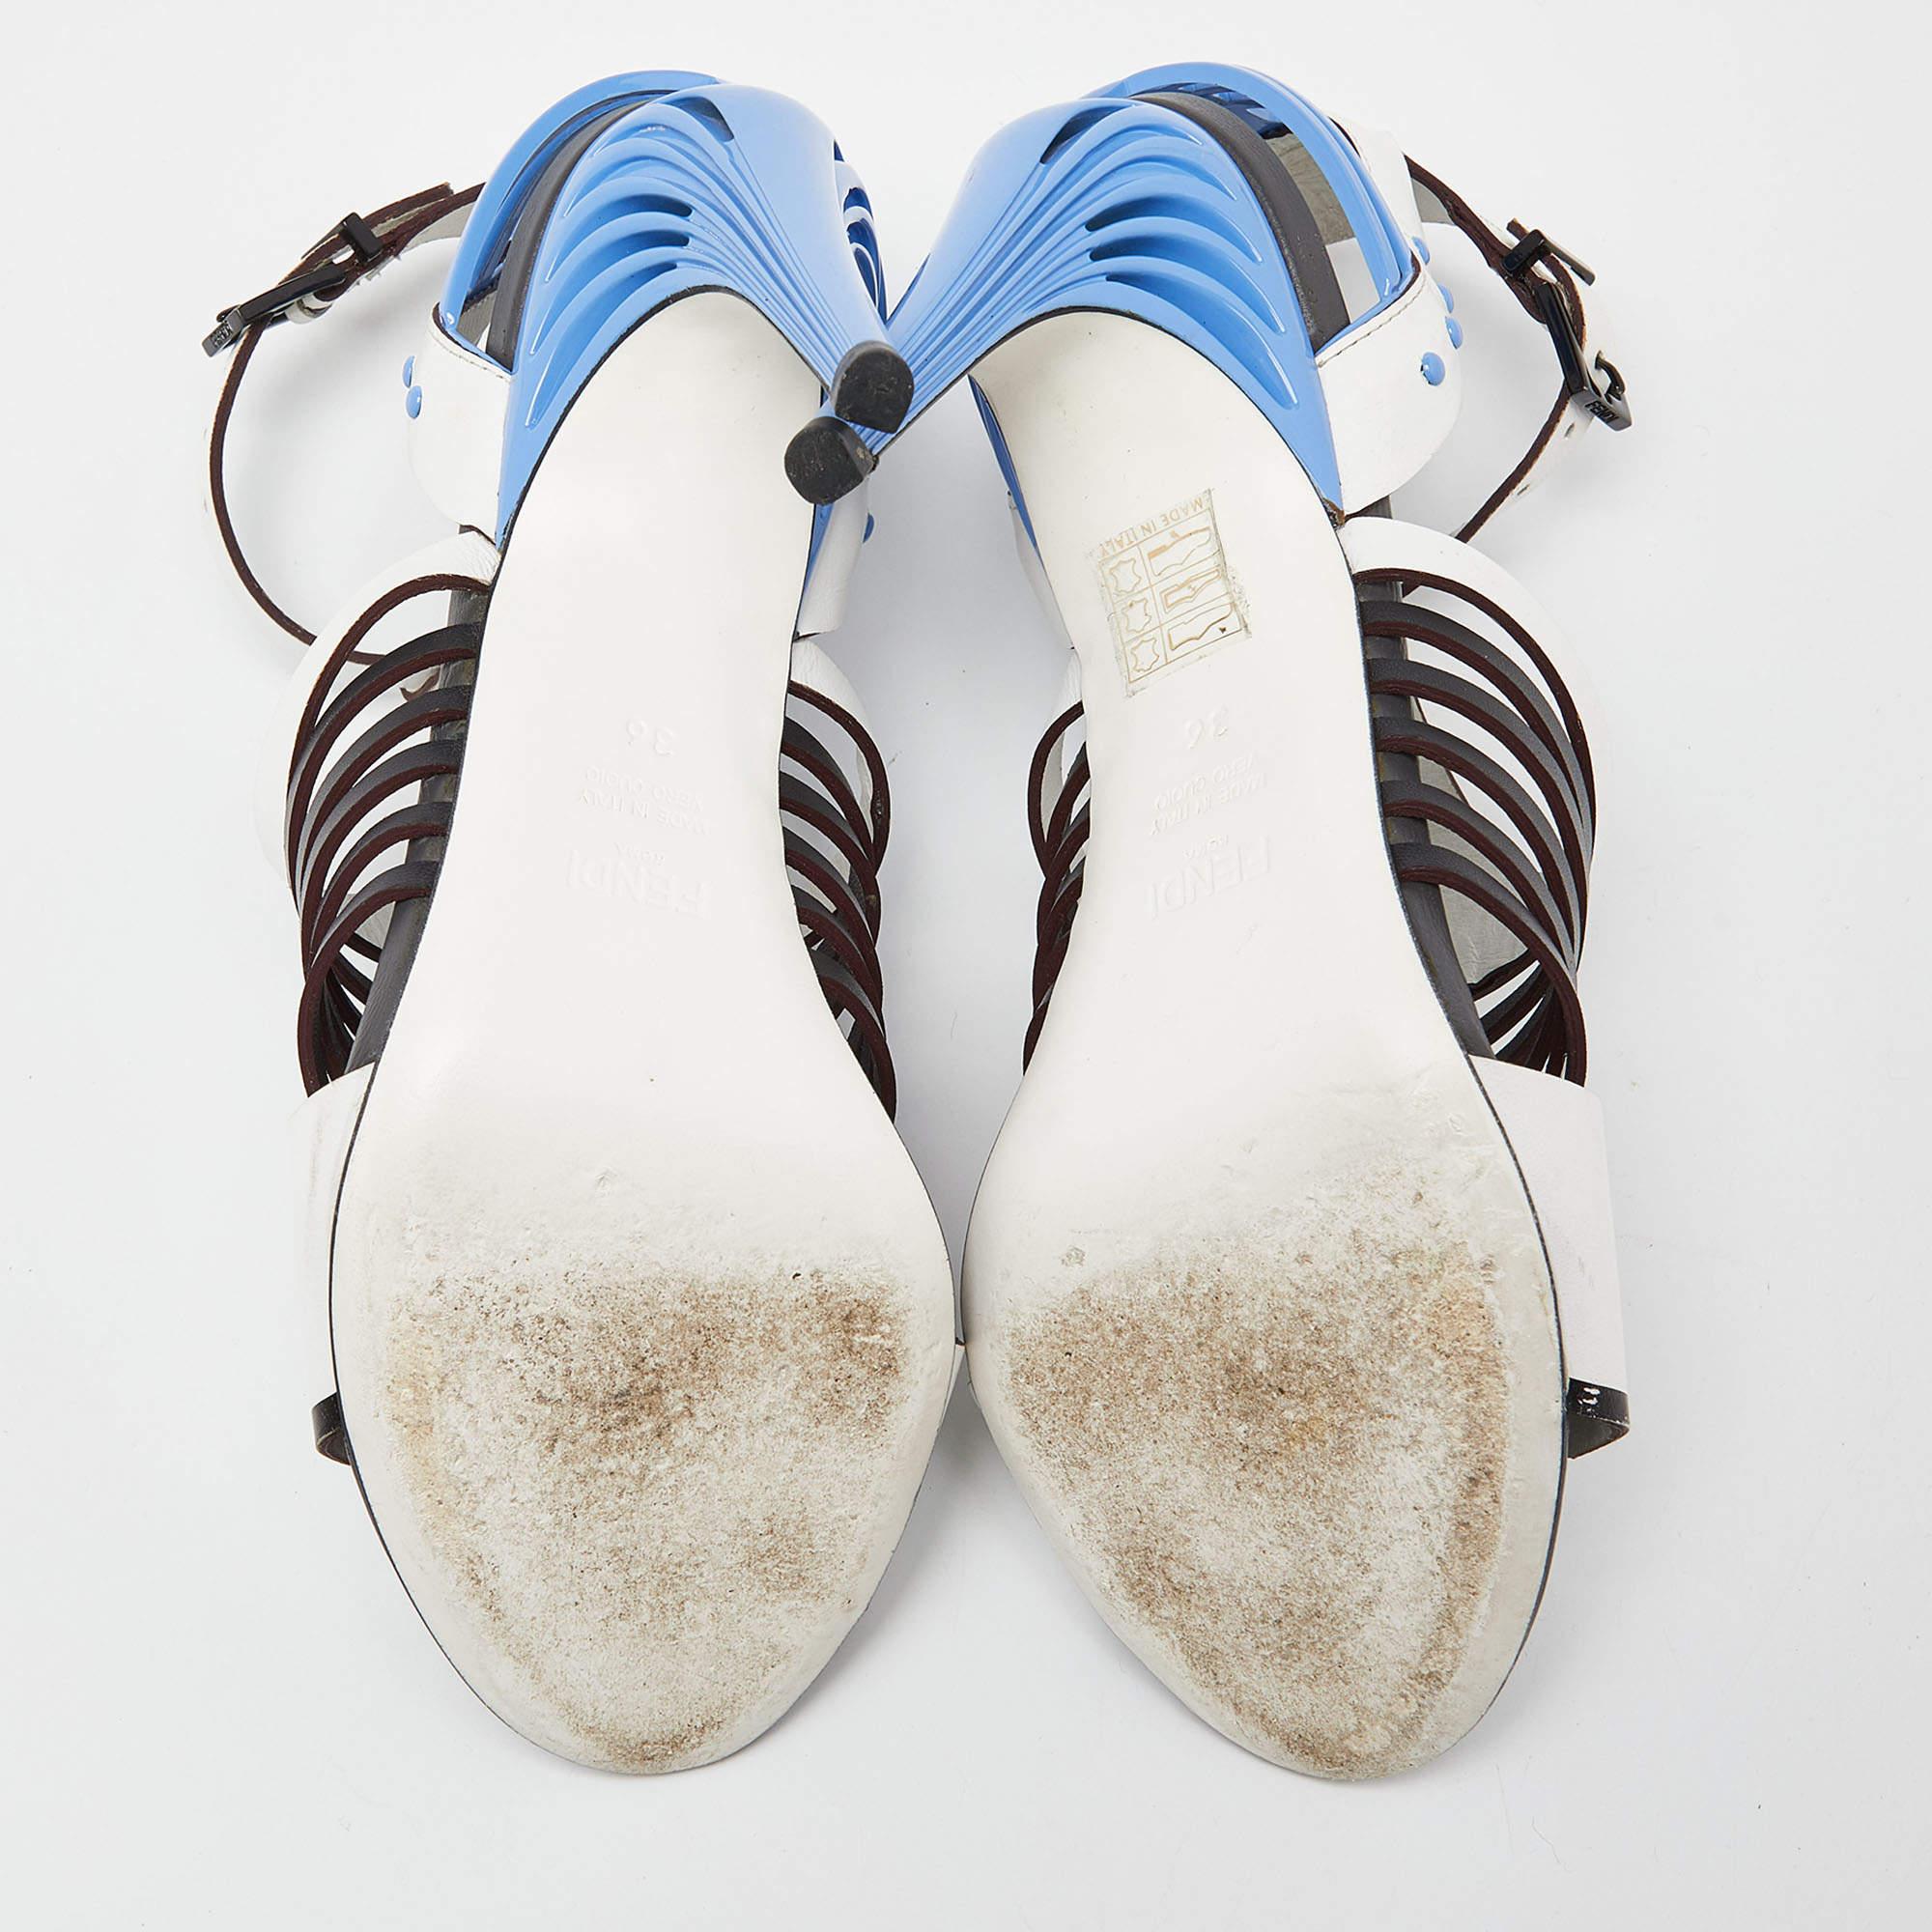 Fendi Tricolor Leather Strappy Sandals Size 36 3